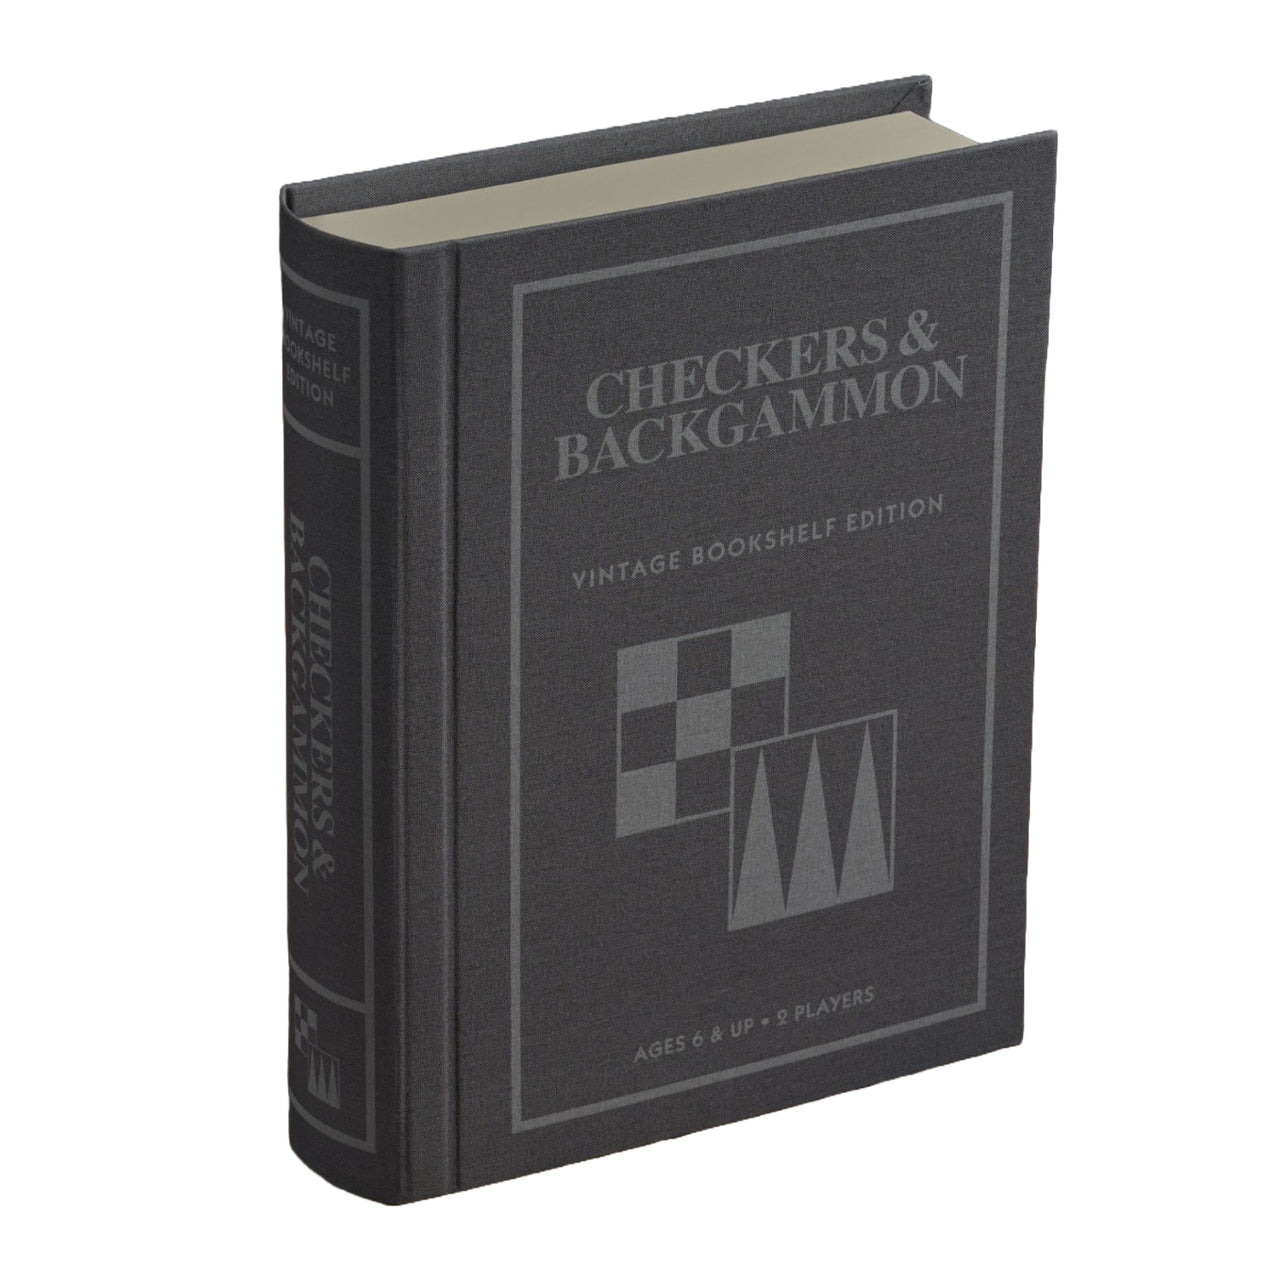 Checkers & Backgammon | Vintage Bookshelf Edition